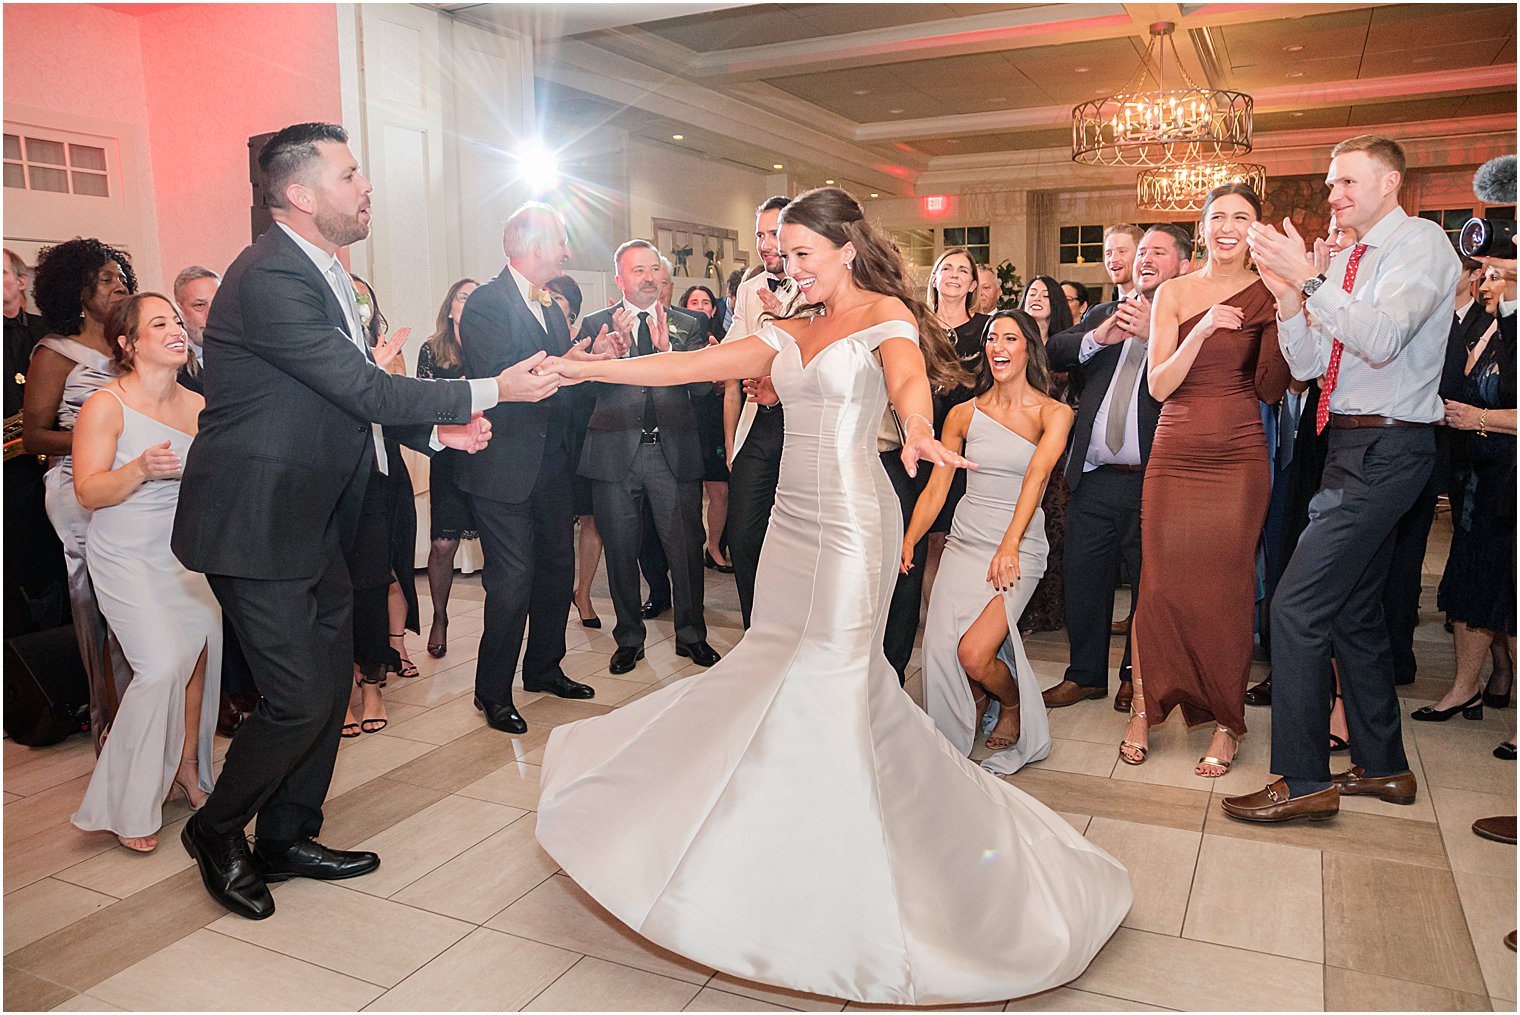 guest dances with bride during Franklin Lakes NJ wedding reception